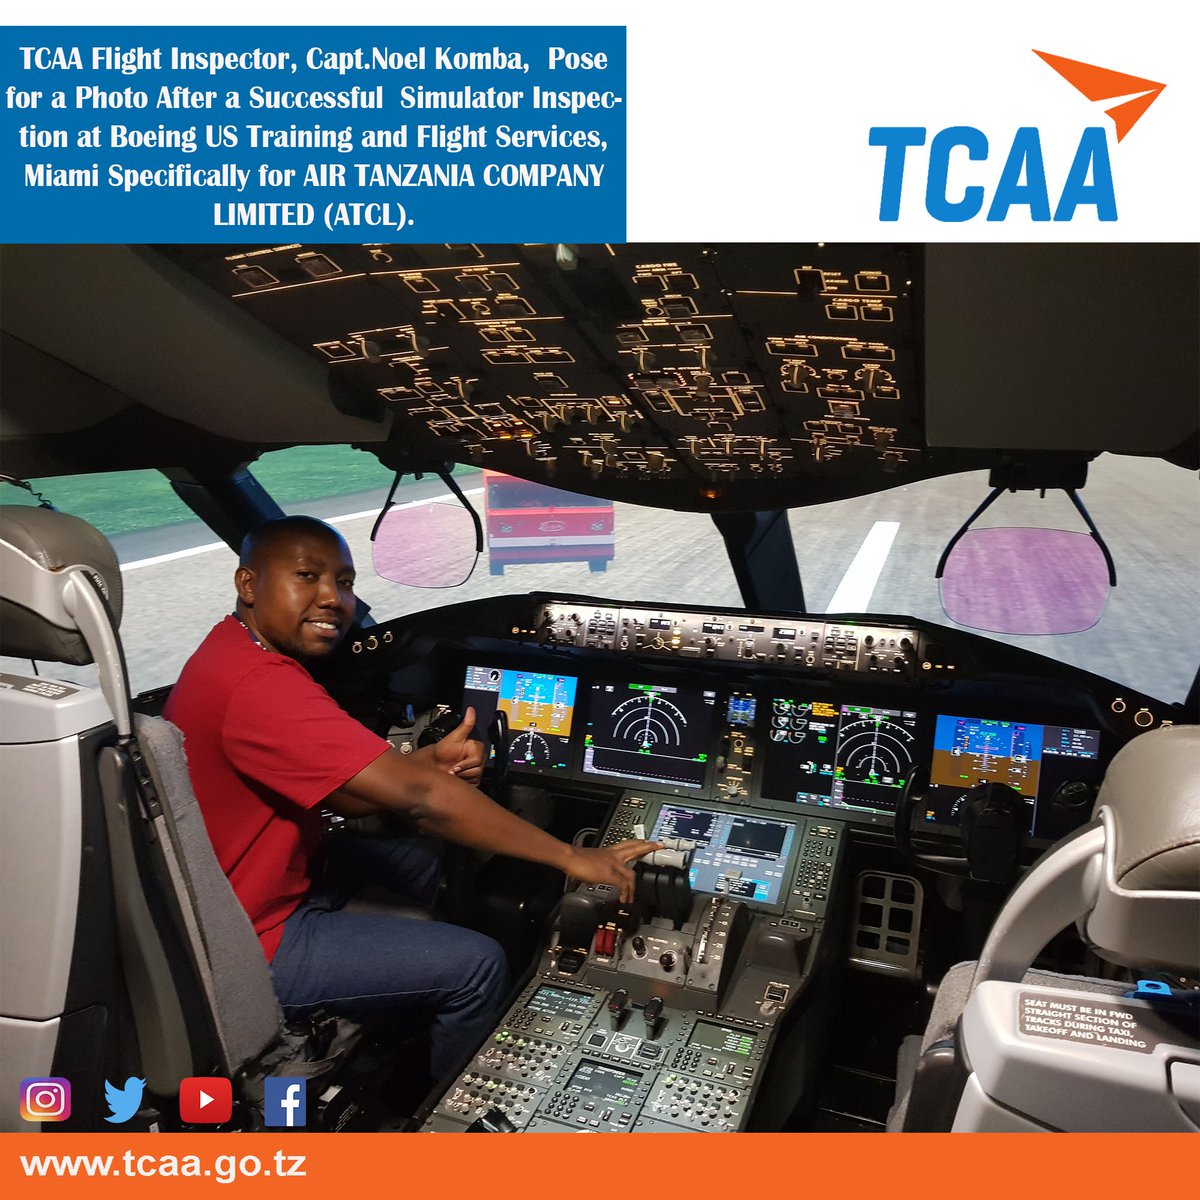 #TCAA #Tanzania #Civilaviation #Safetyregulation #Flightinspection #Flightinspector #ATCL